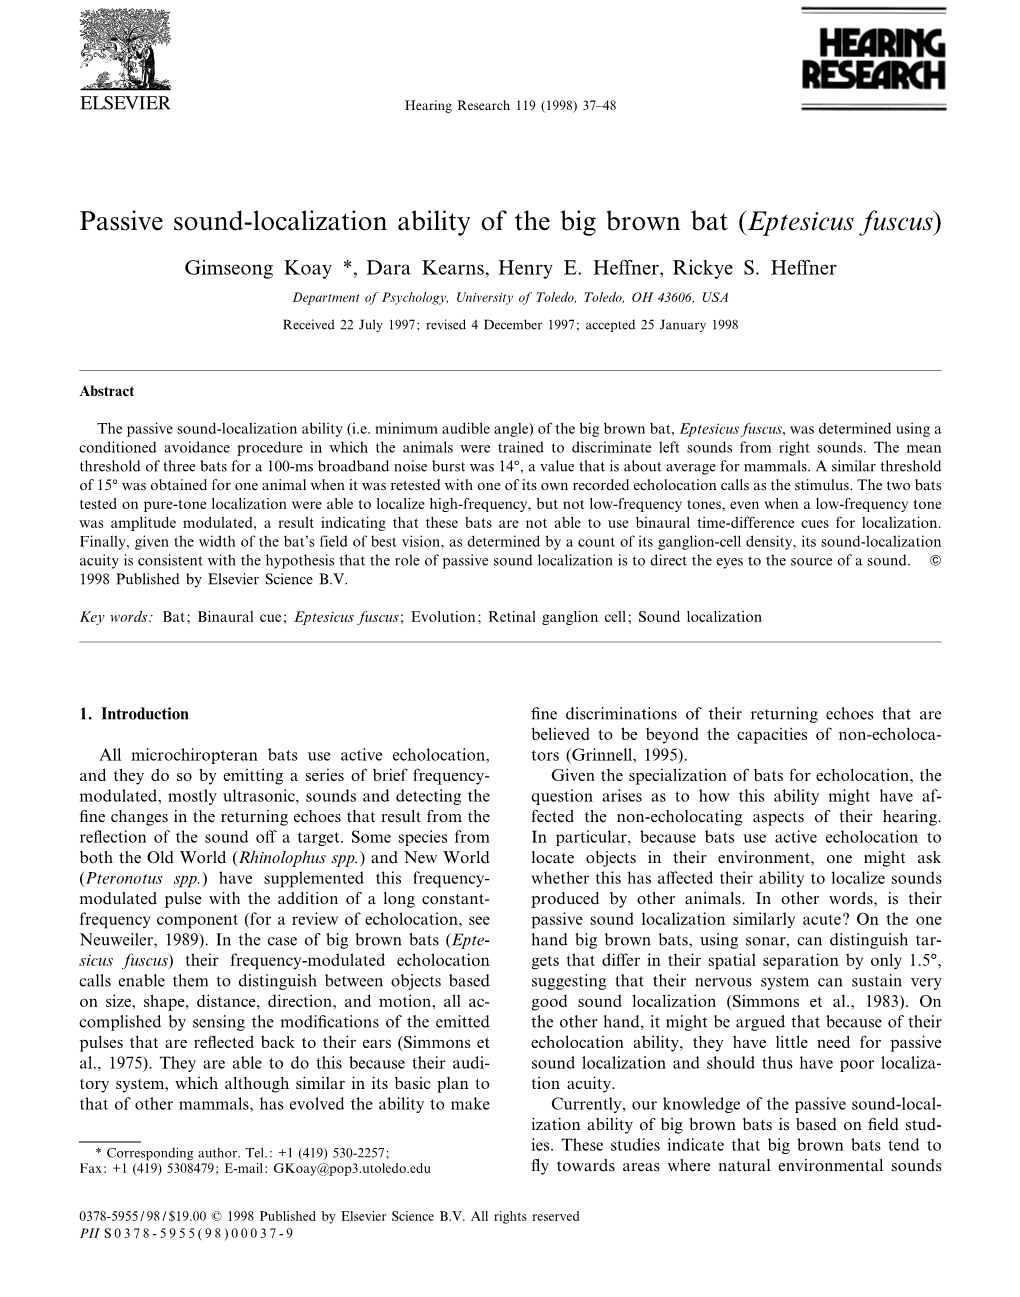 Passive Sound-Localization Ability of the Big Brown Bat (Eptesicus Fuscus)